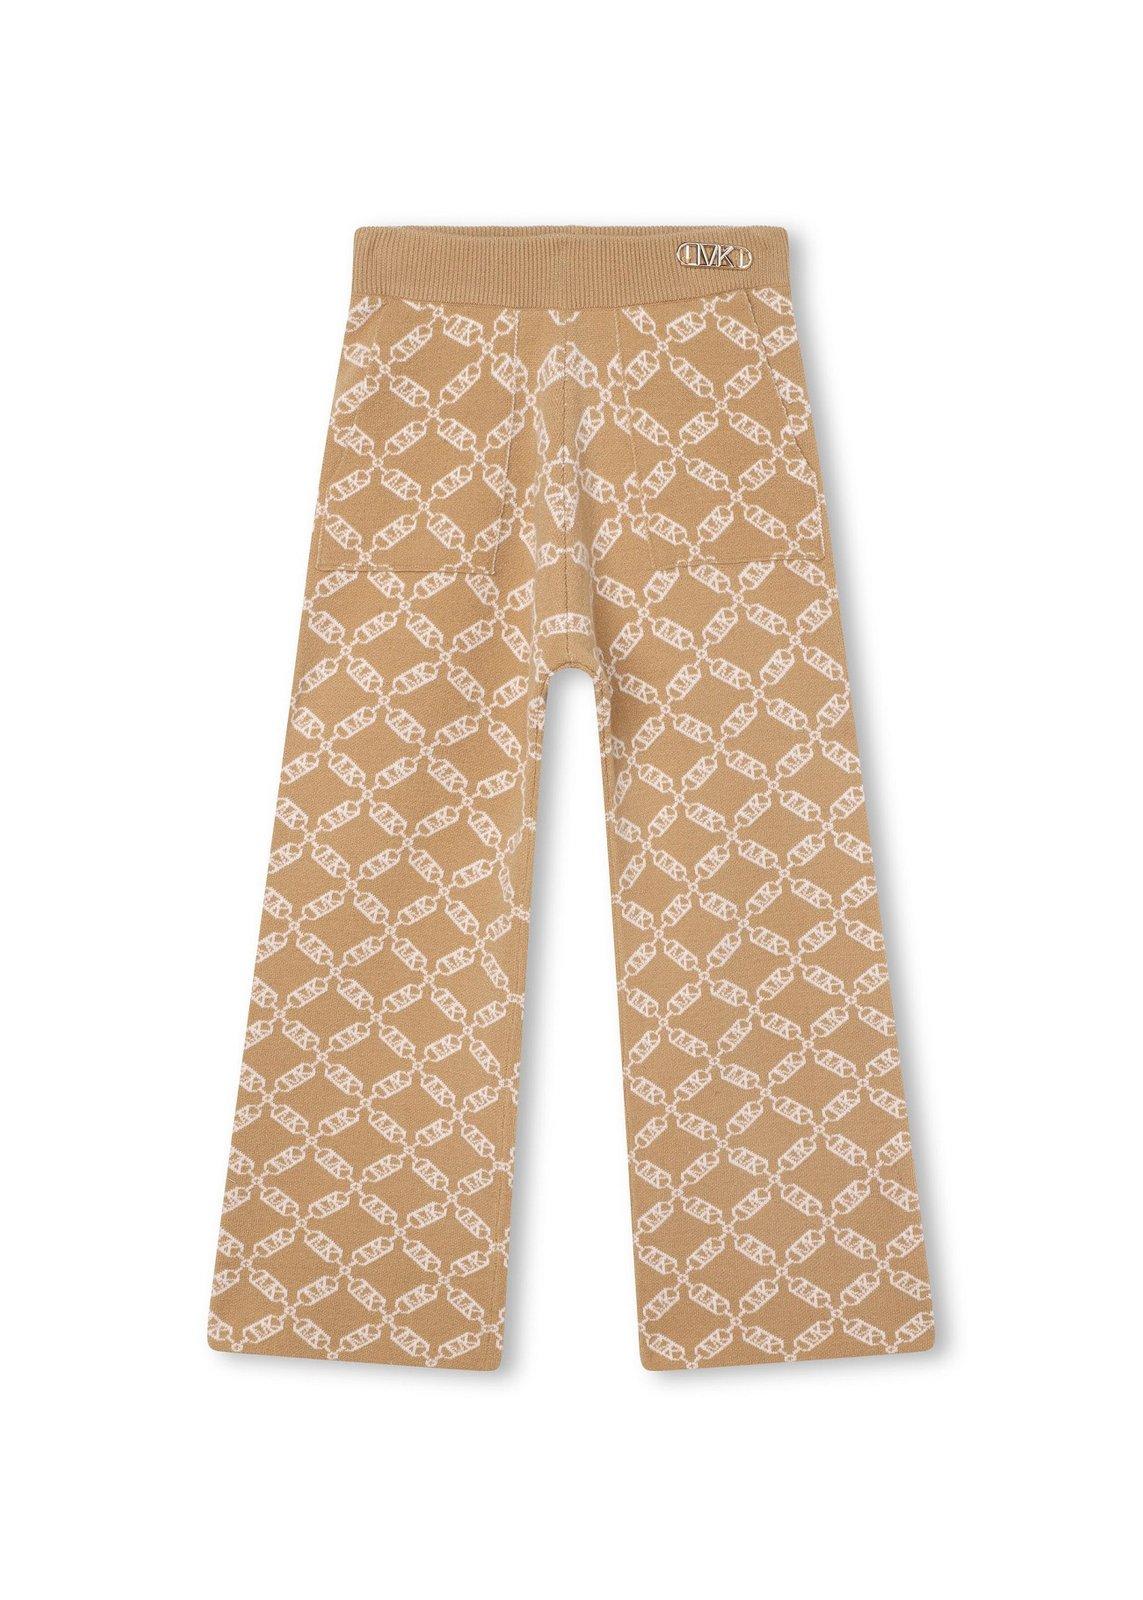 Michael Kors Empire Logo Print Knit Track Pants